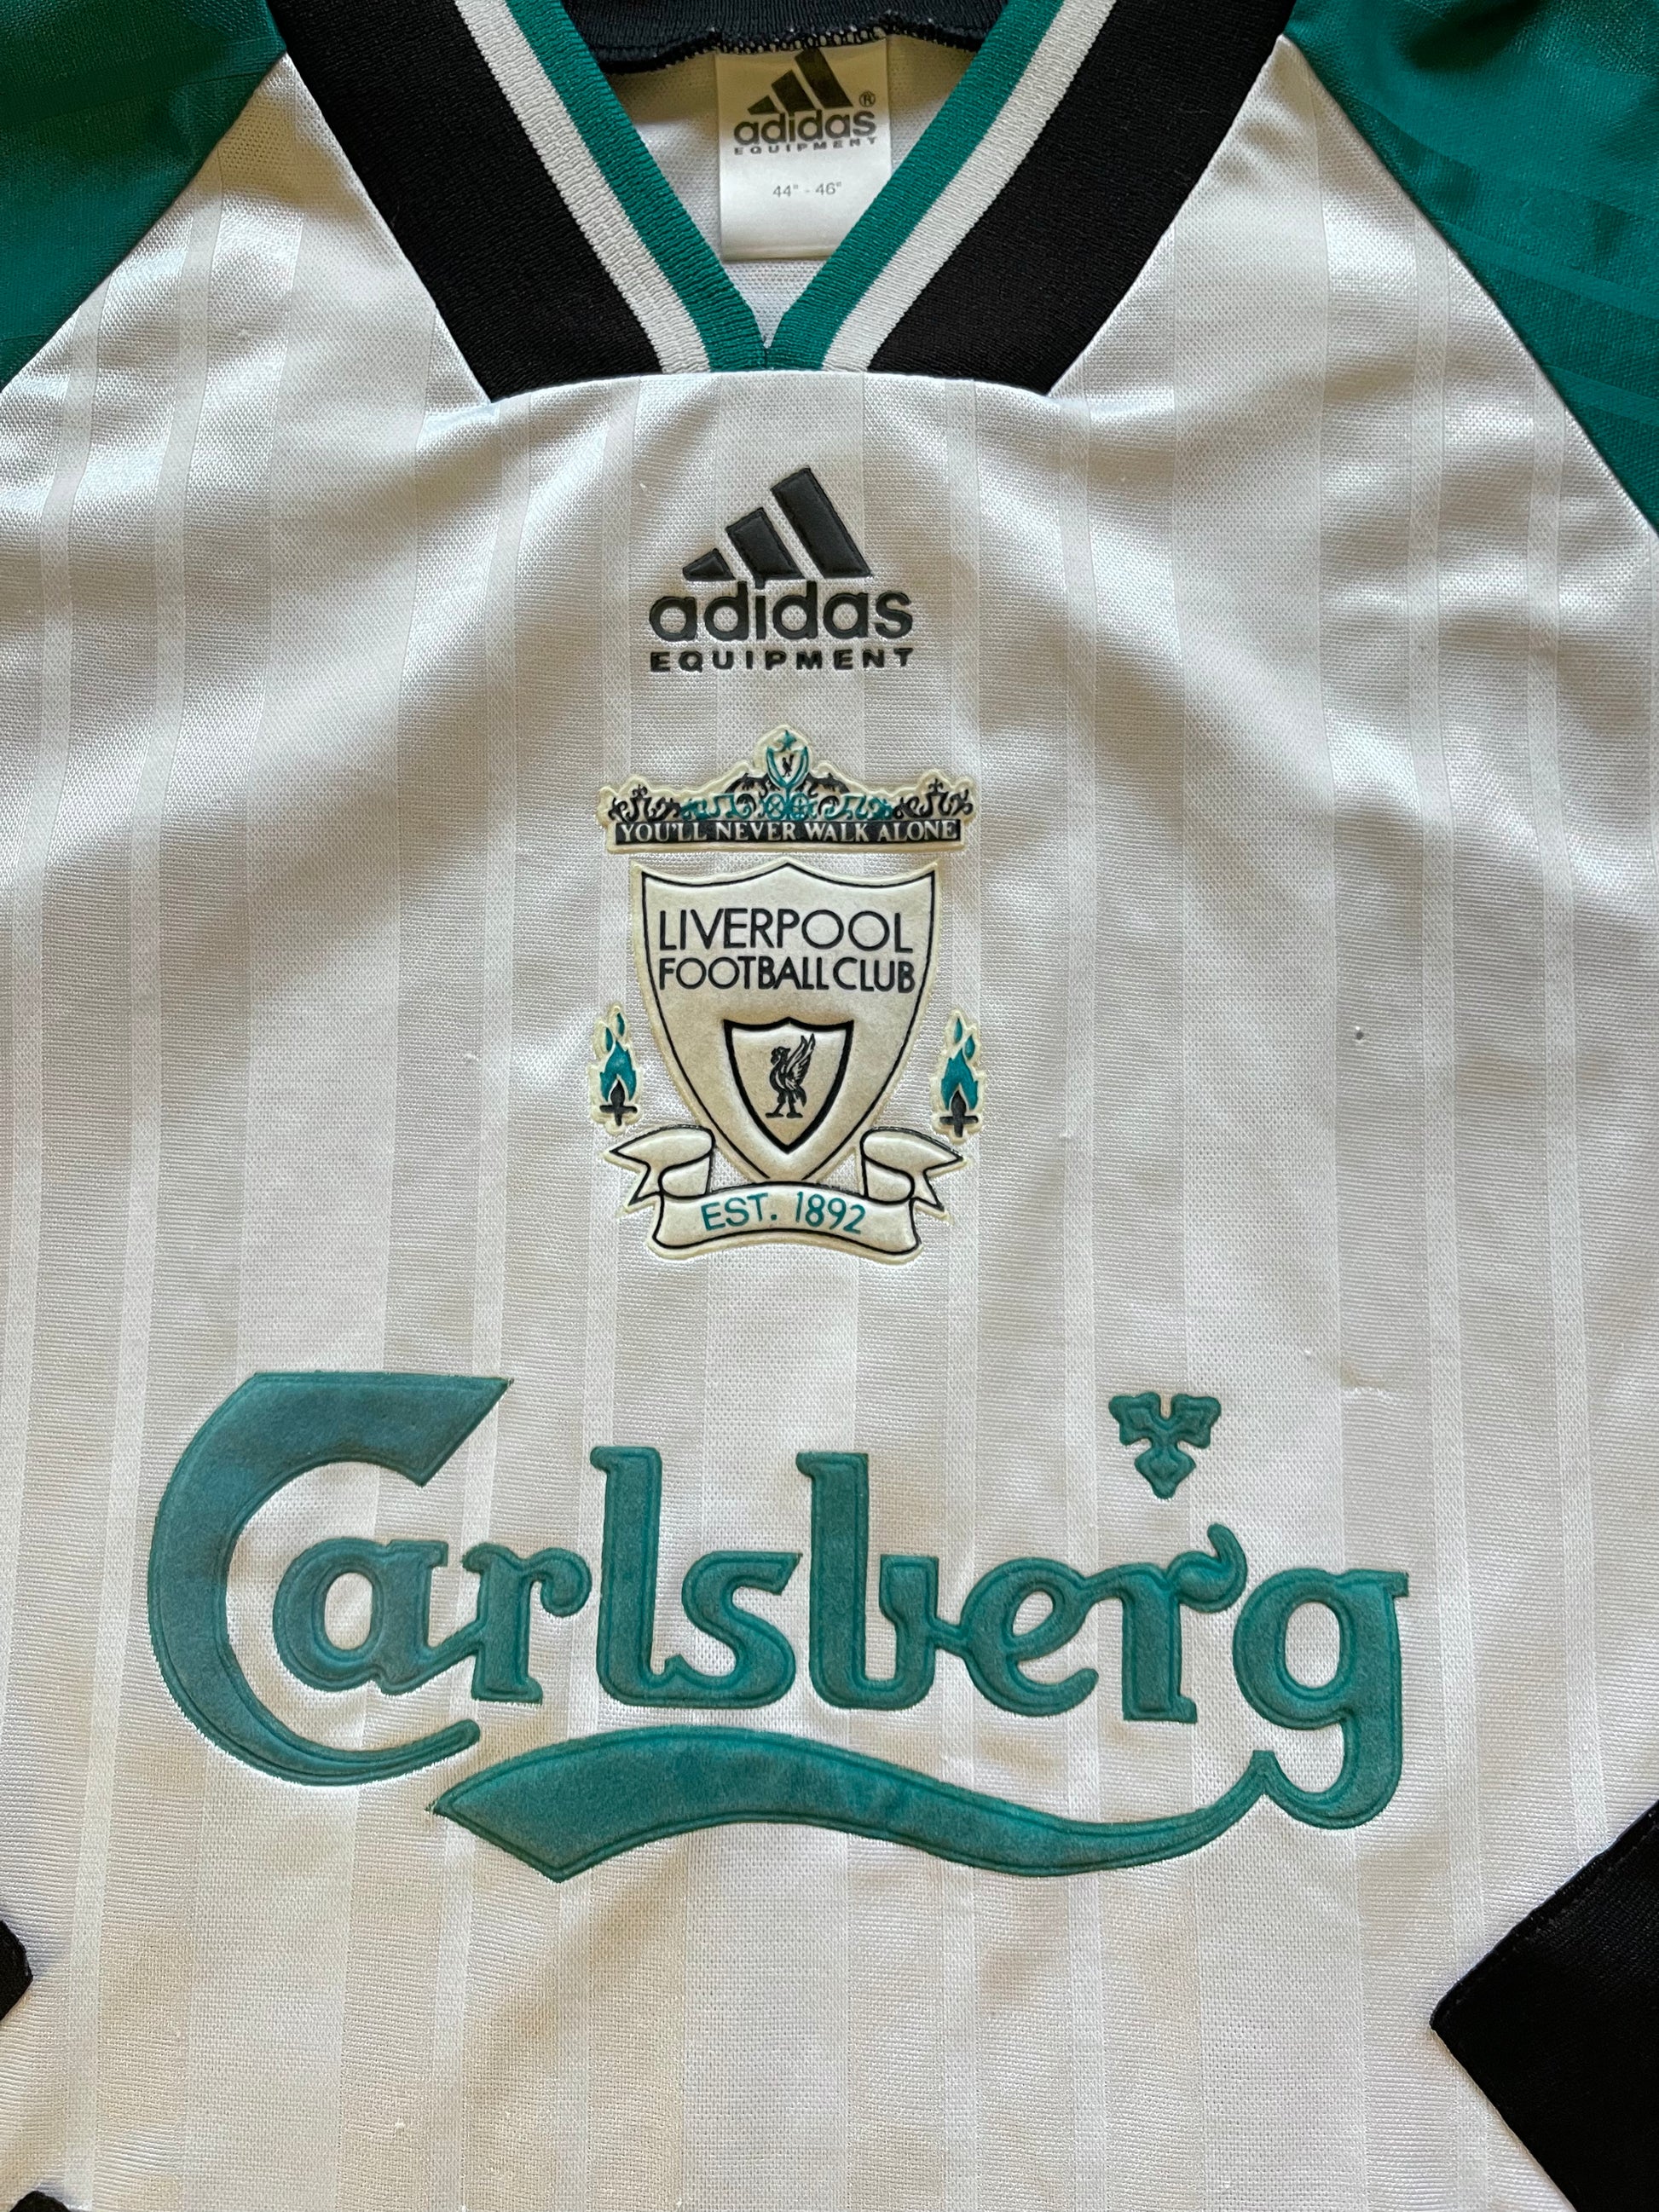 Liverpool FC Adidas Equipment 1993 1994 1995 Away Football Shirt Carlsberg Made in UK White Green Black 44'' 46''